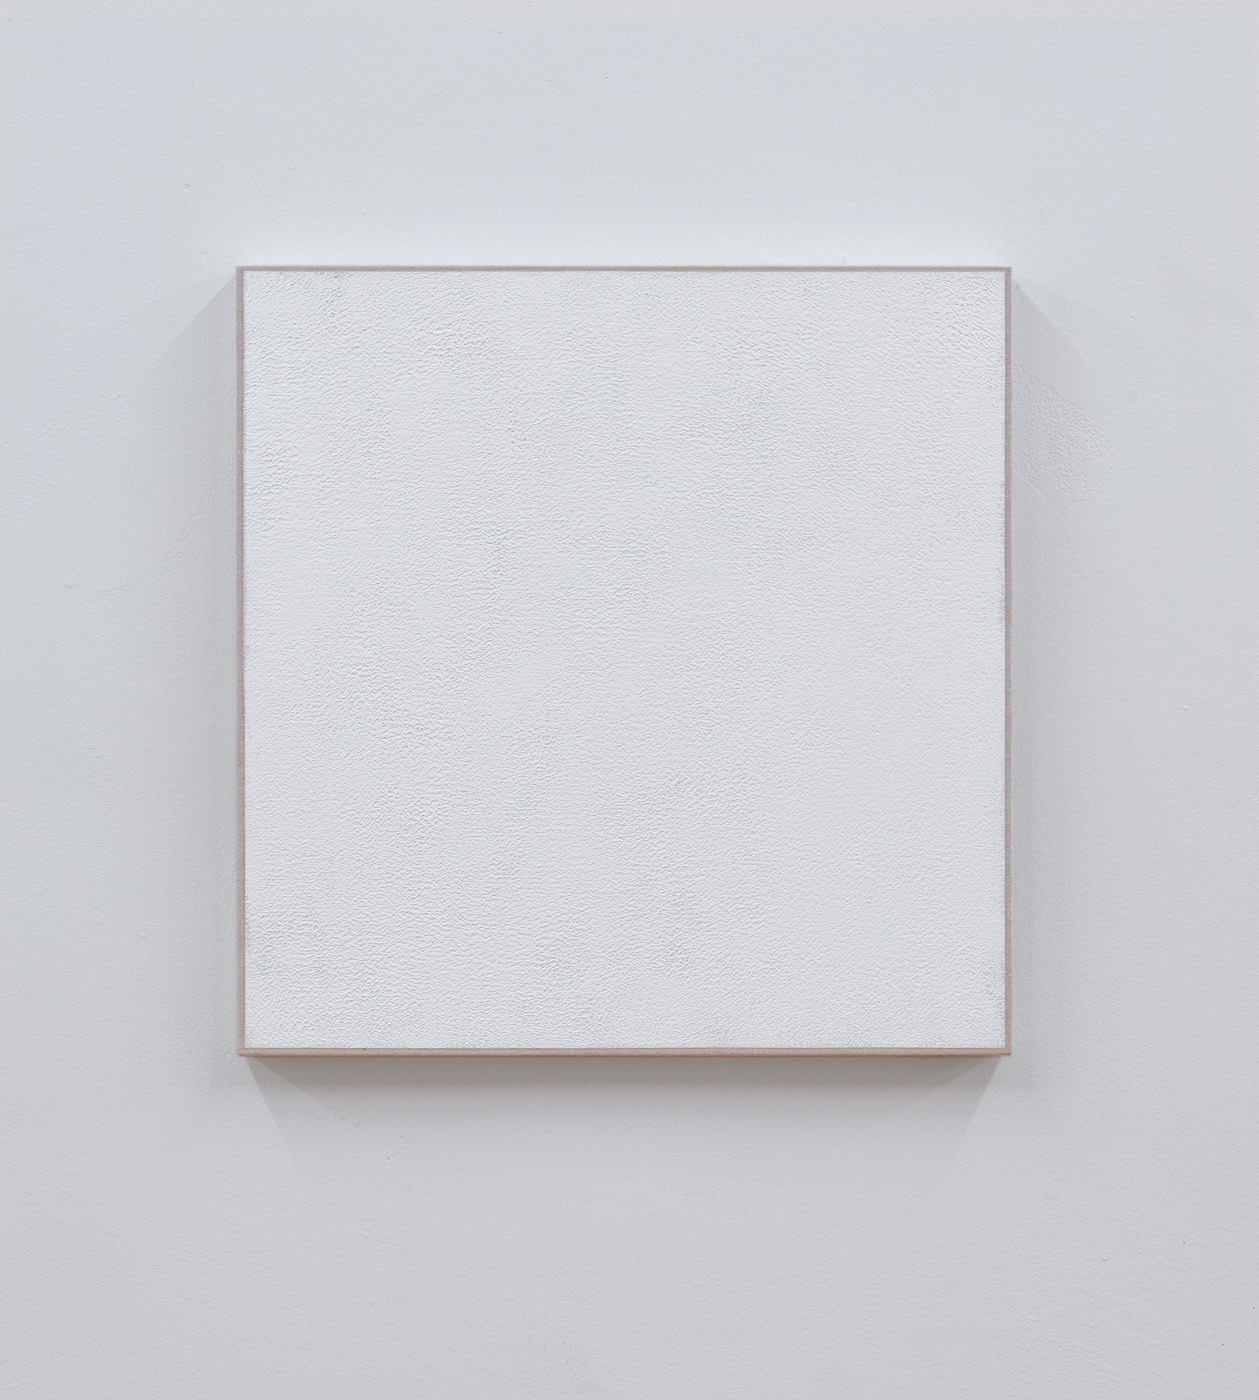  Untitled #1  Oil on cotton,&nbsp;15" x 14-3/4",&nbsp;  2014-2015.   